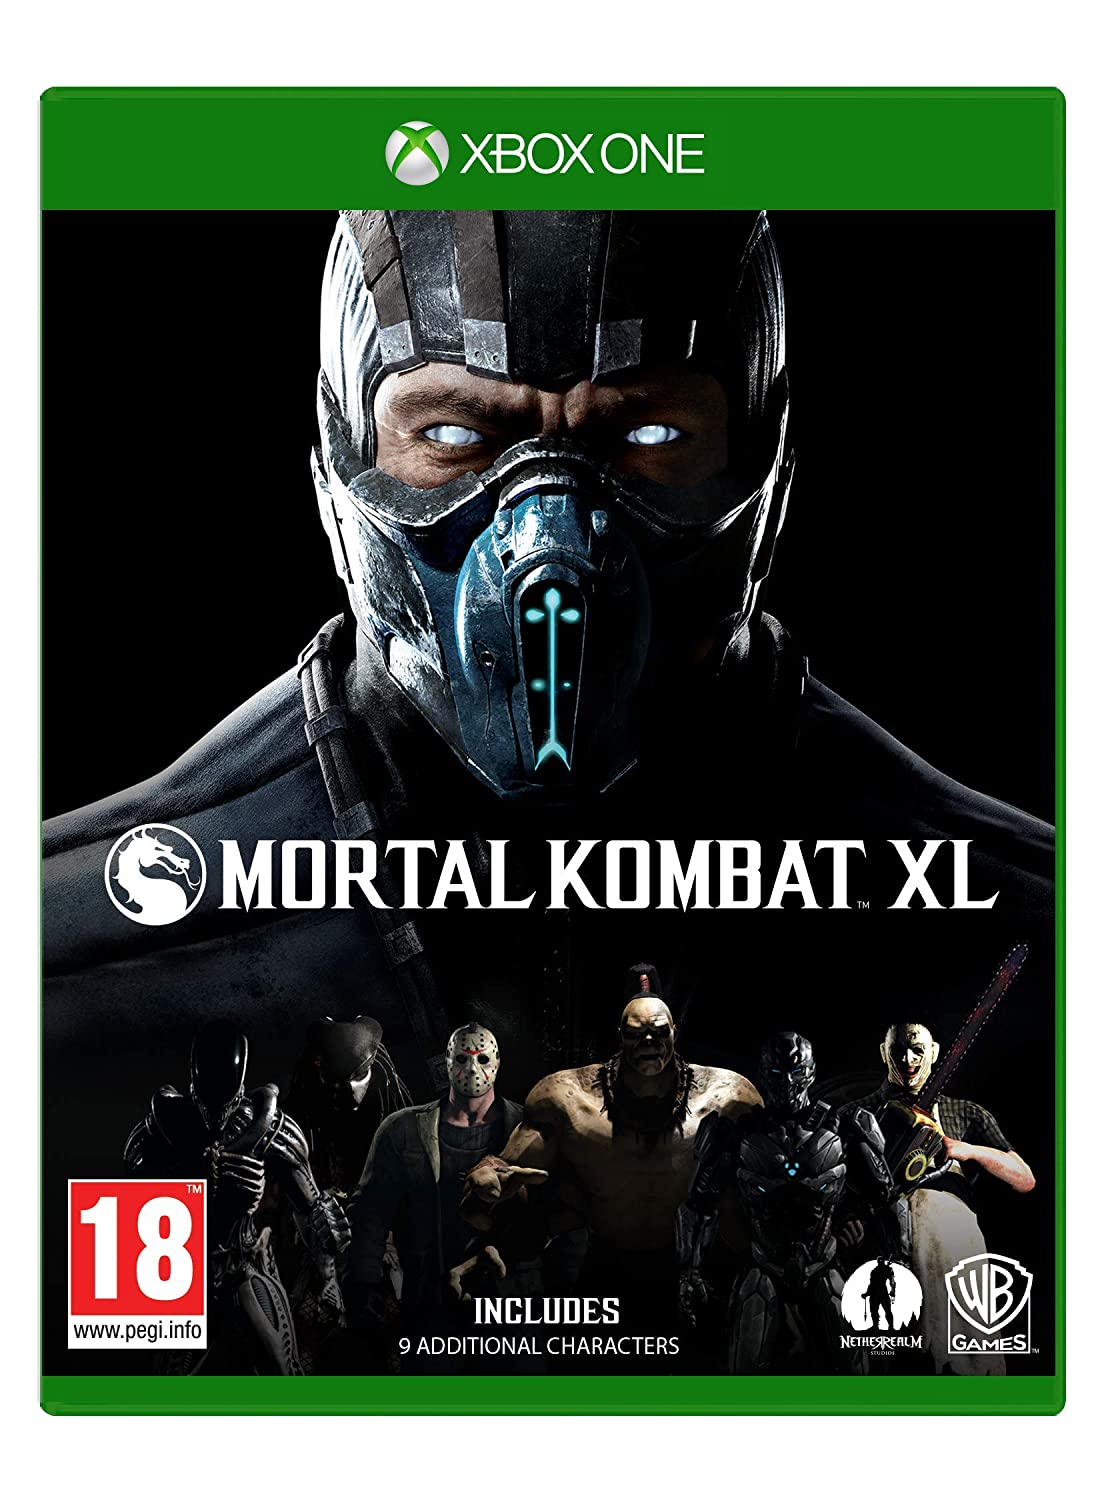 Mortal Kombat XL Digital Download Key (Xbox One): GLOBAL (works worldwide)